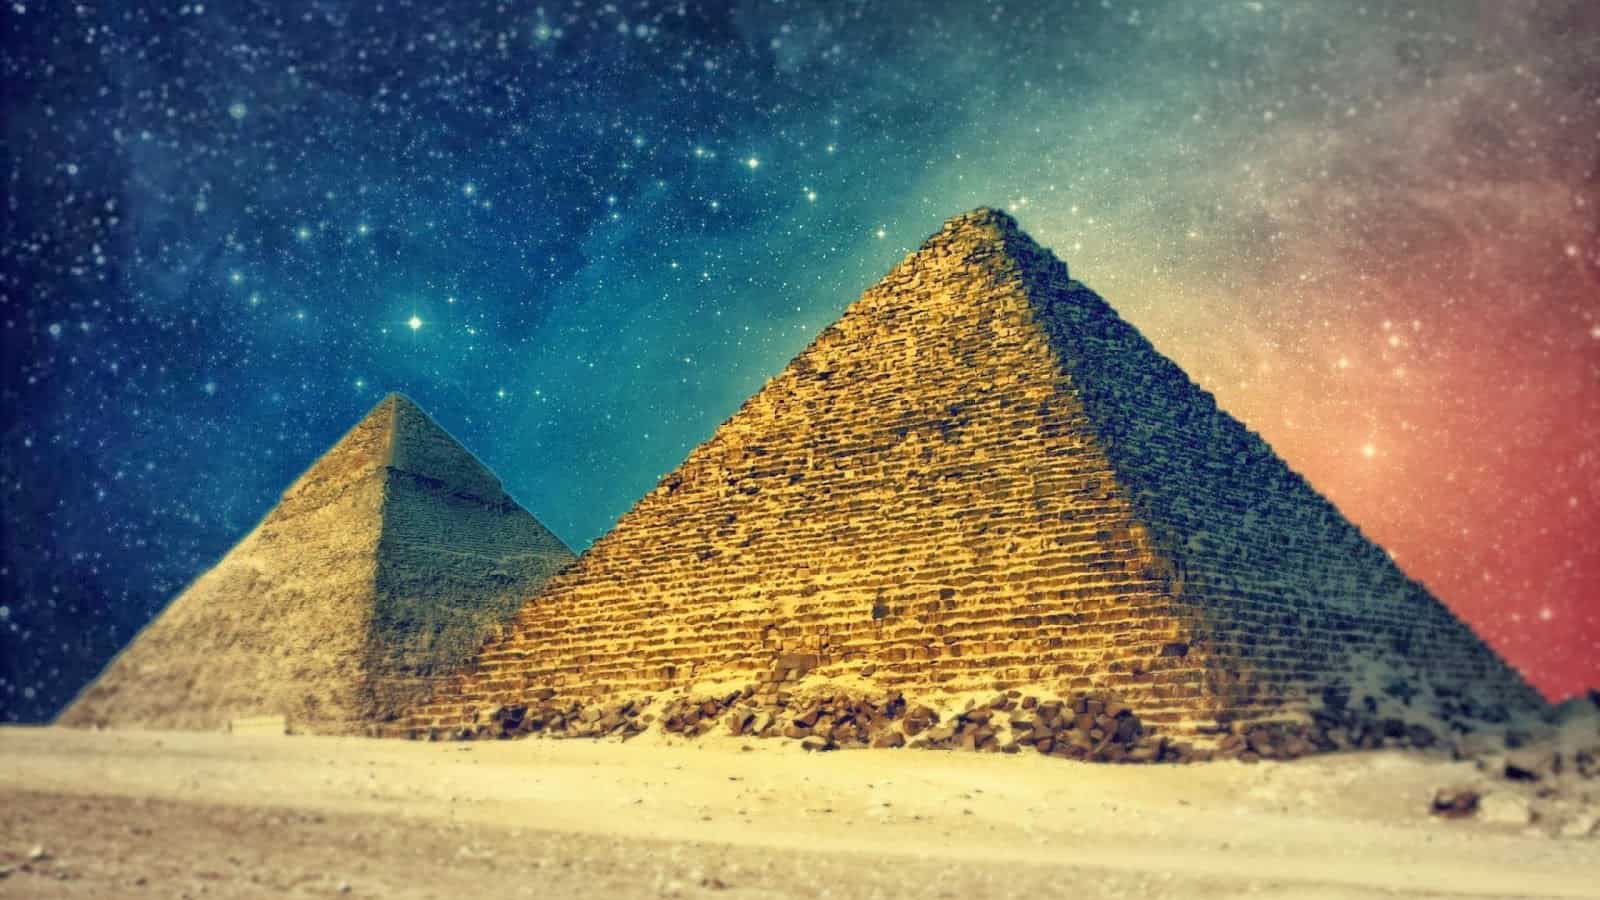 Egypt Pyramids Art